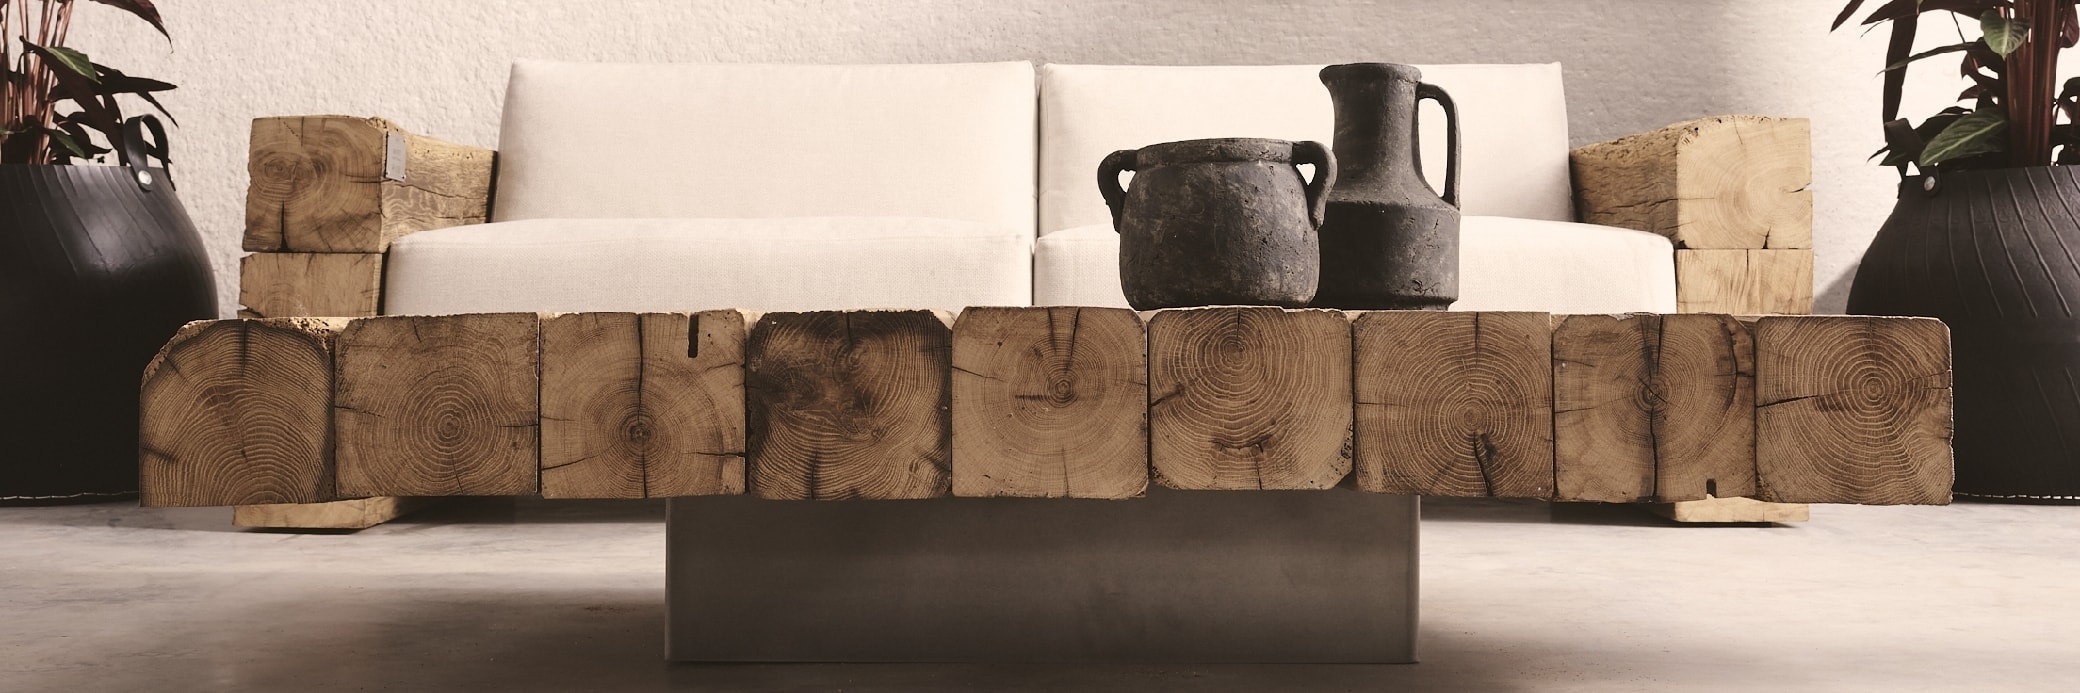 Rustic & Reclaimed Wood Coffee Table | Made in France | Oakâme